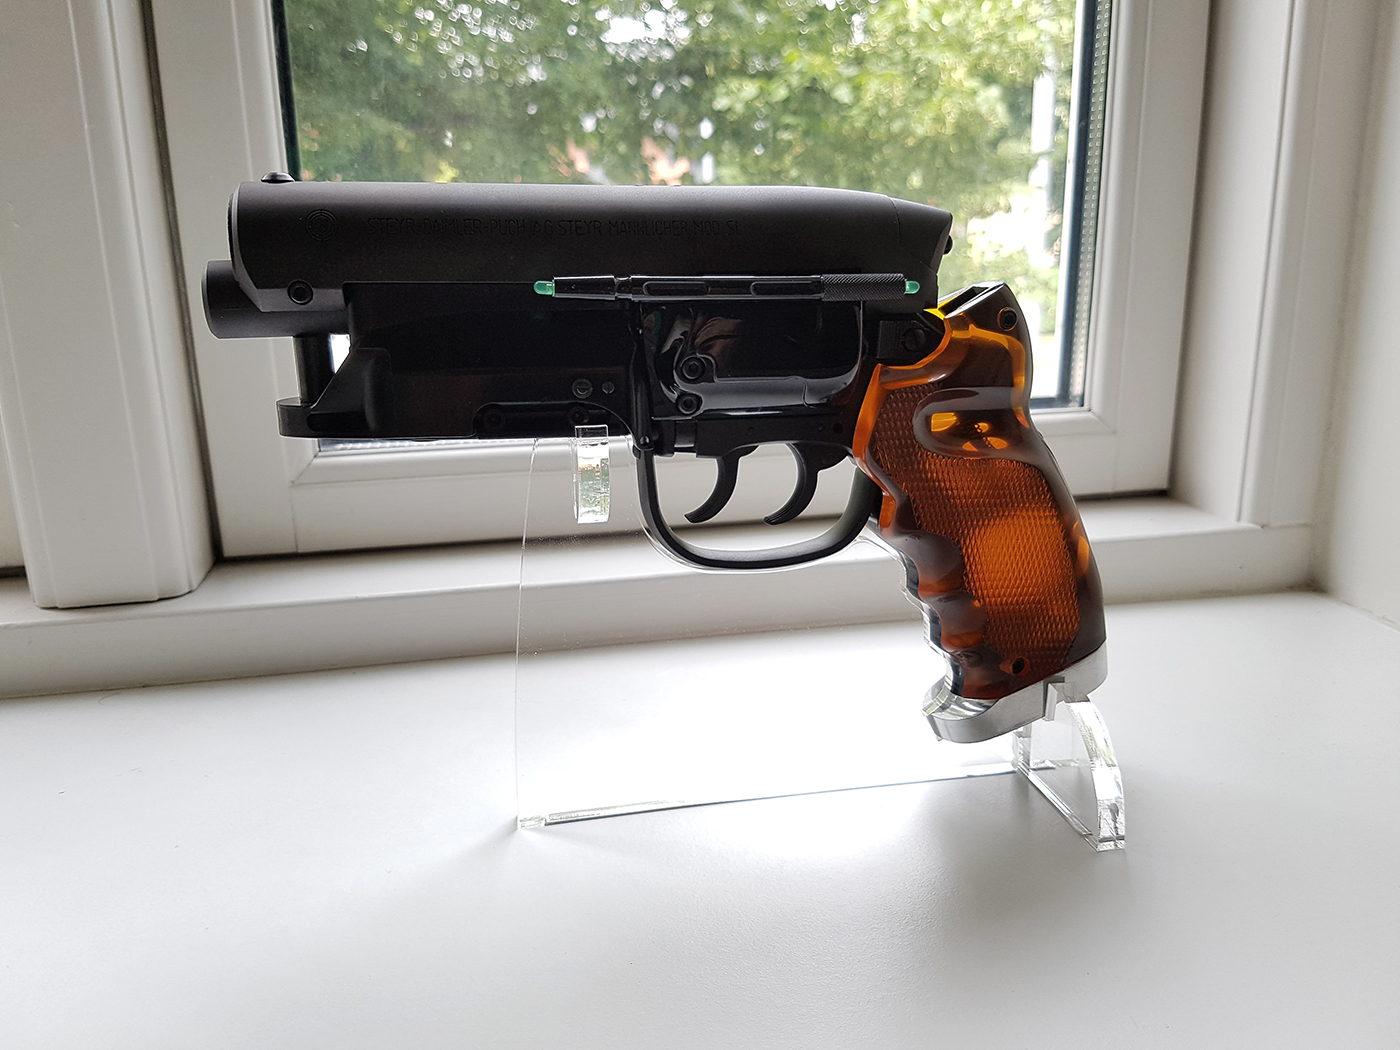 Acrylic Sci Fi Blade Runner Blaster Pistol Gun Movie Prop Display Stand 